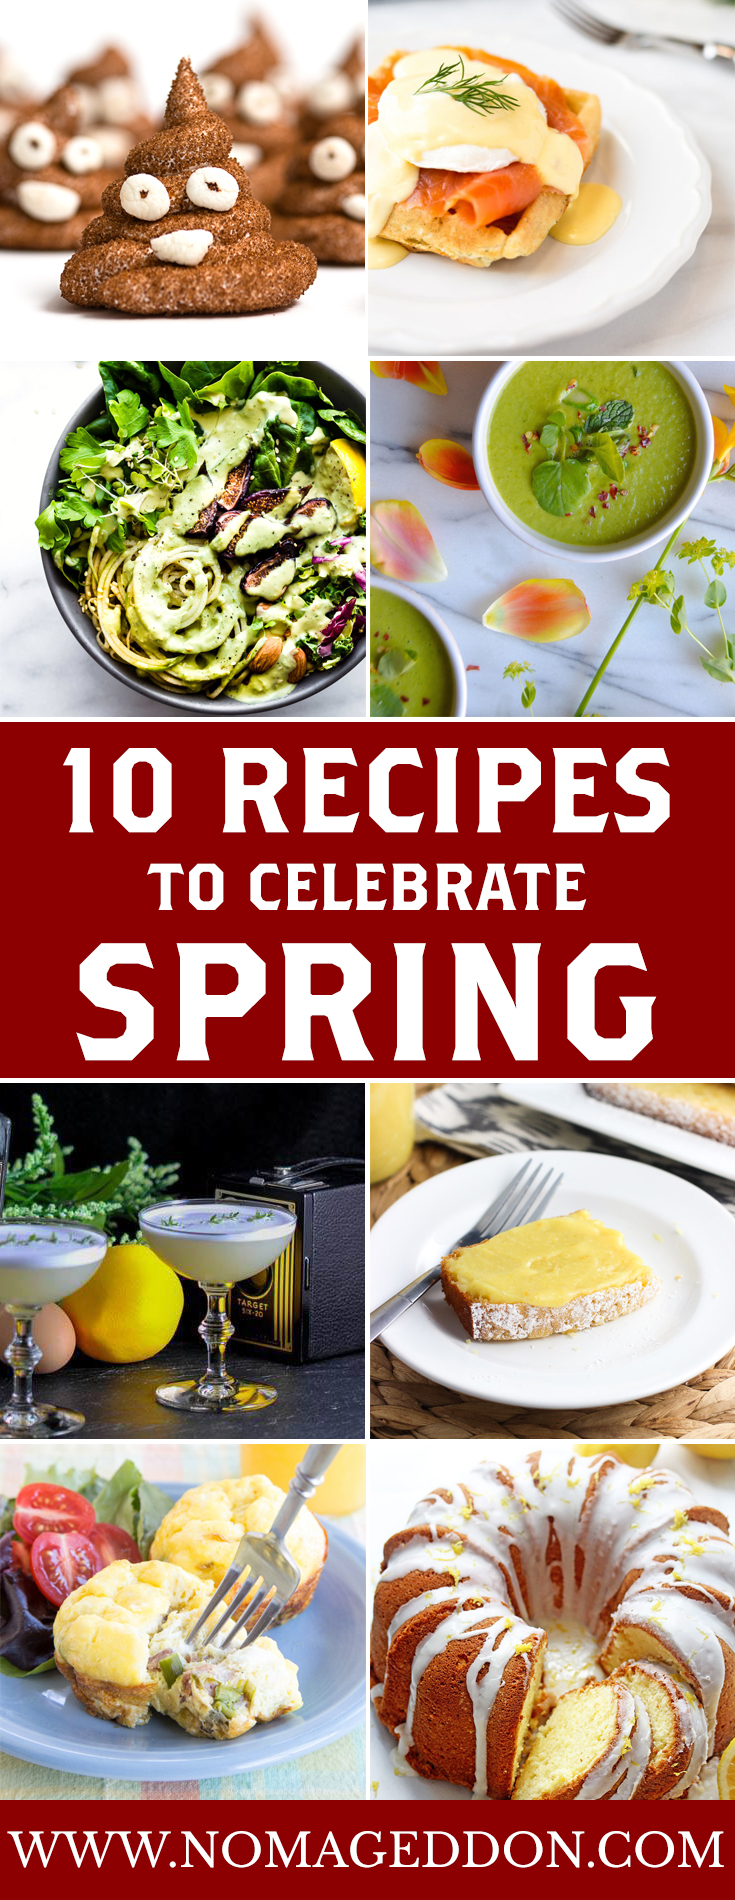 10 Recipes To Celebrate Spring